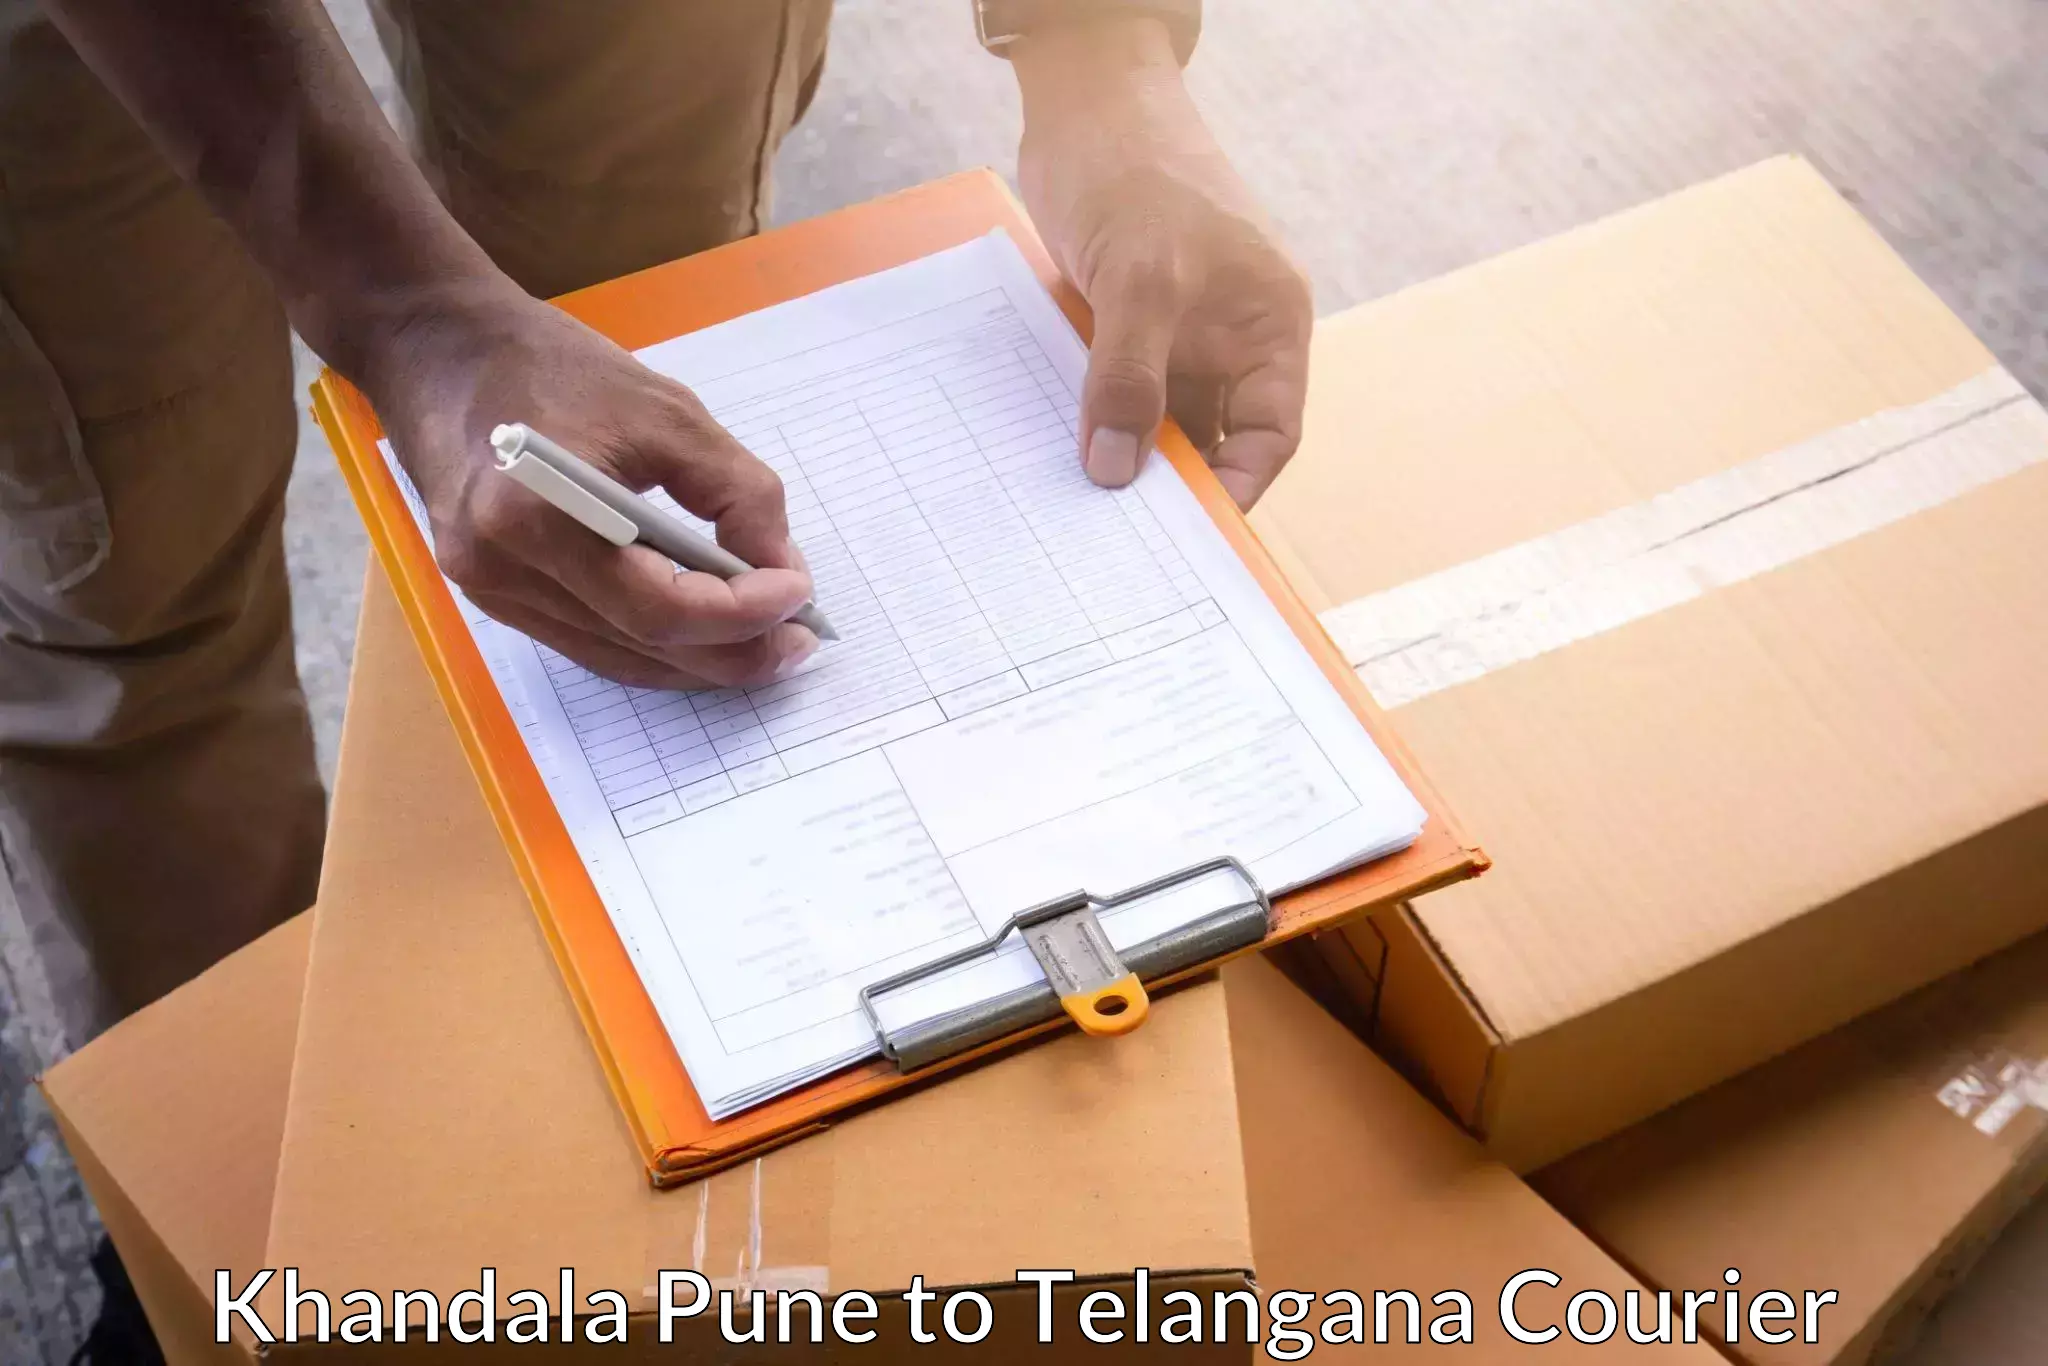 Global parcel delivery Khandala Pune to Zahirabad